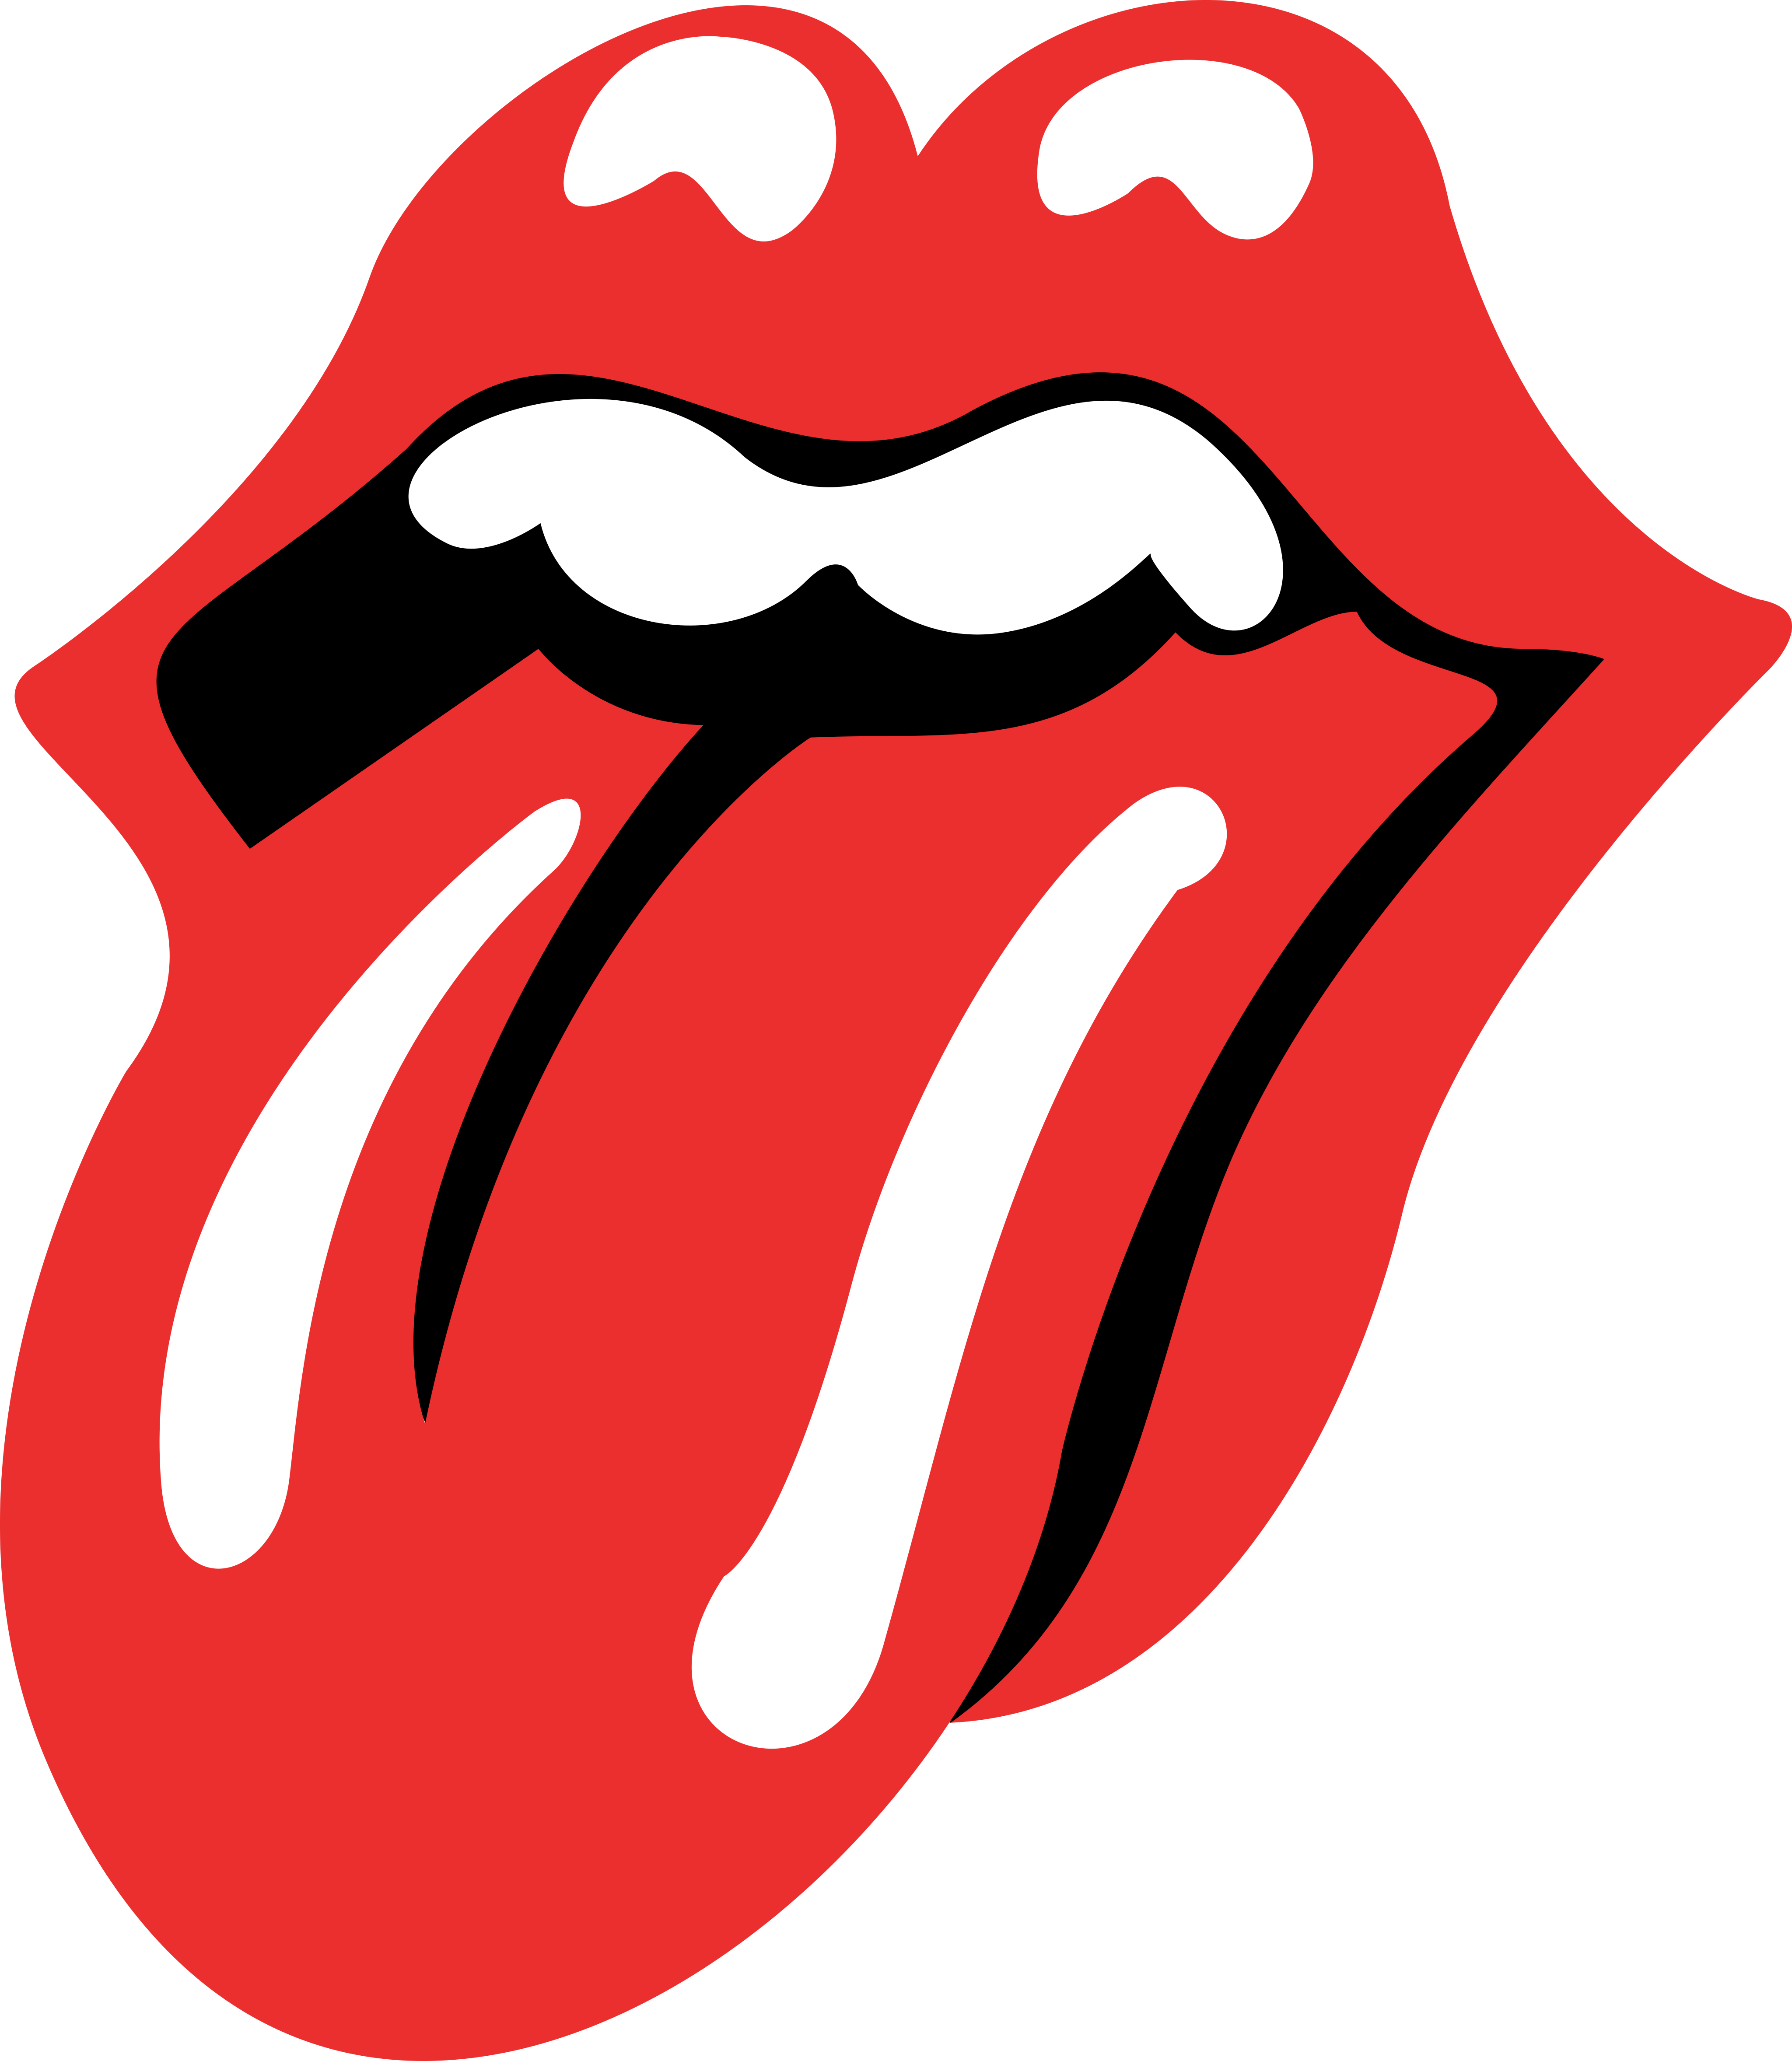 rolling stones logo - The Rolling Stones Logo